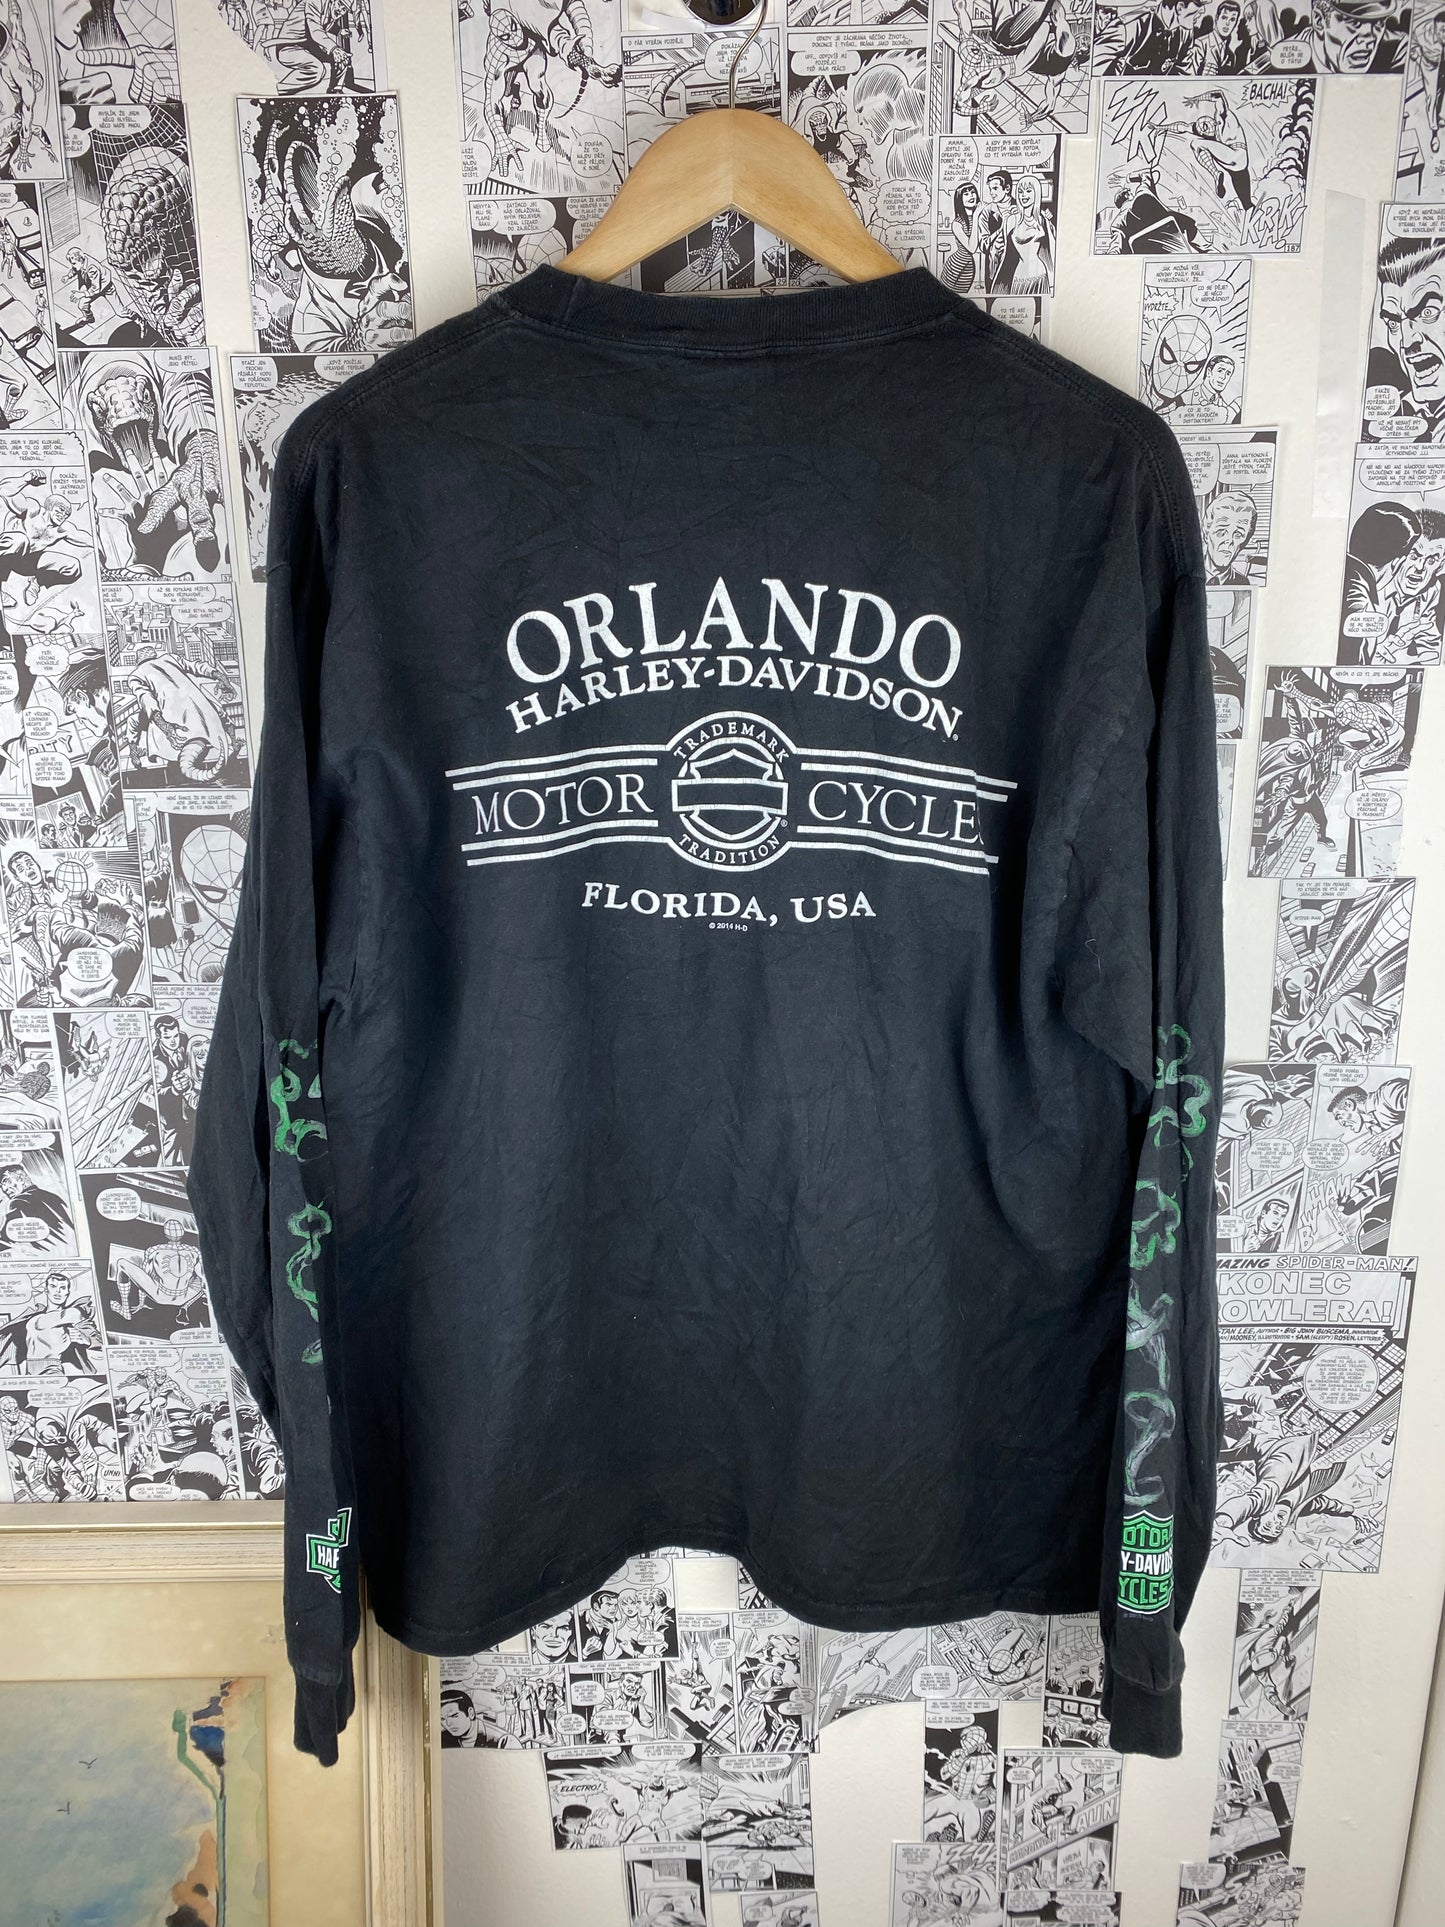 Vintage Harley Davidson “Orlando - Florida” Longsleeve t-shirt - size L